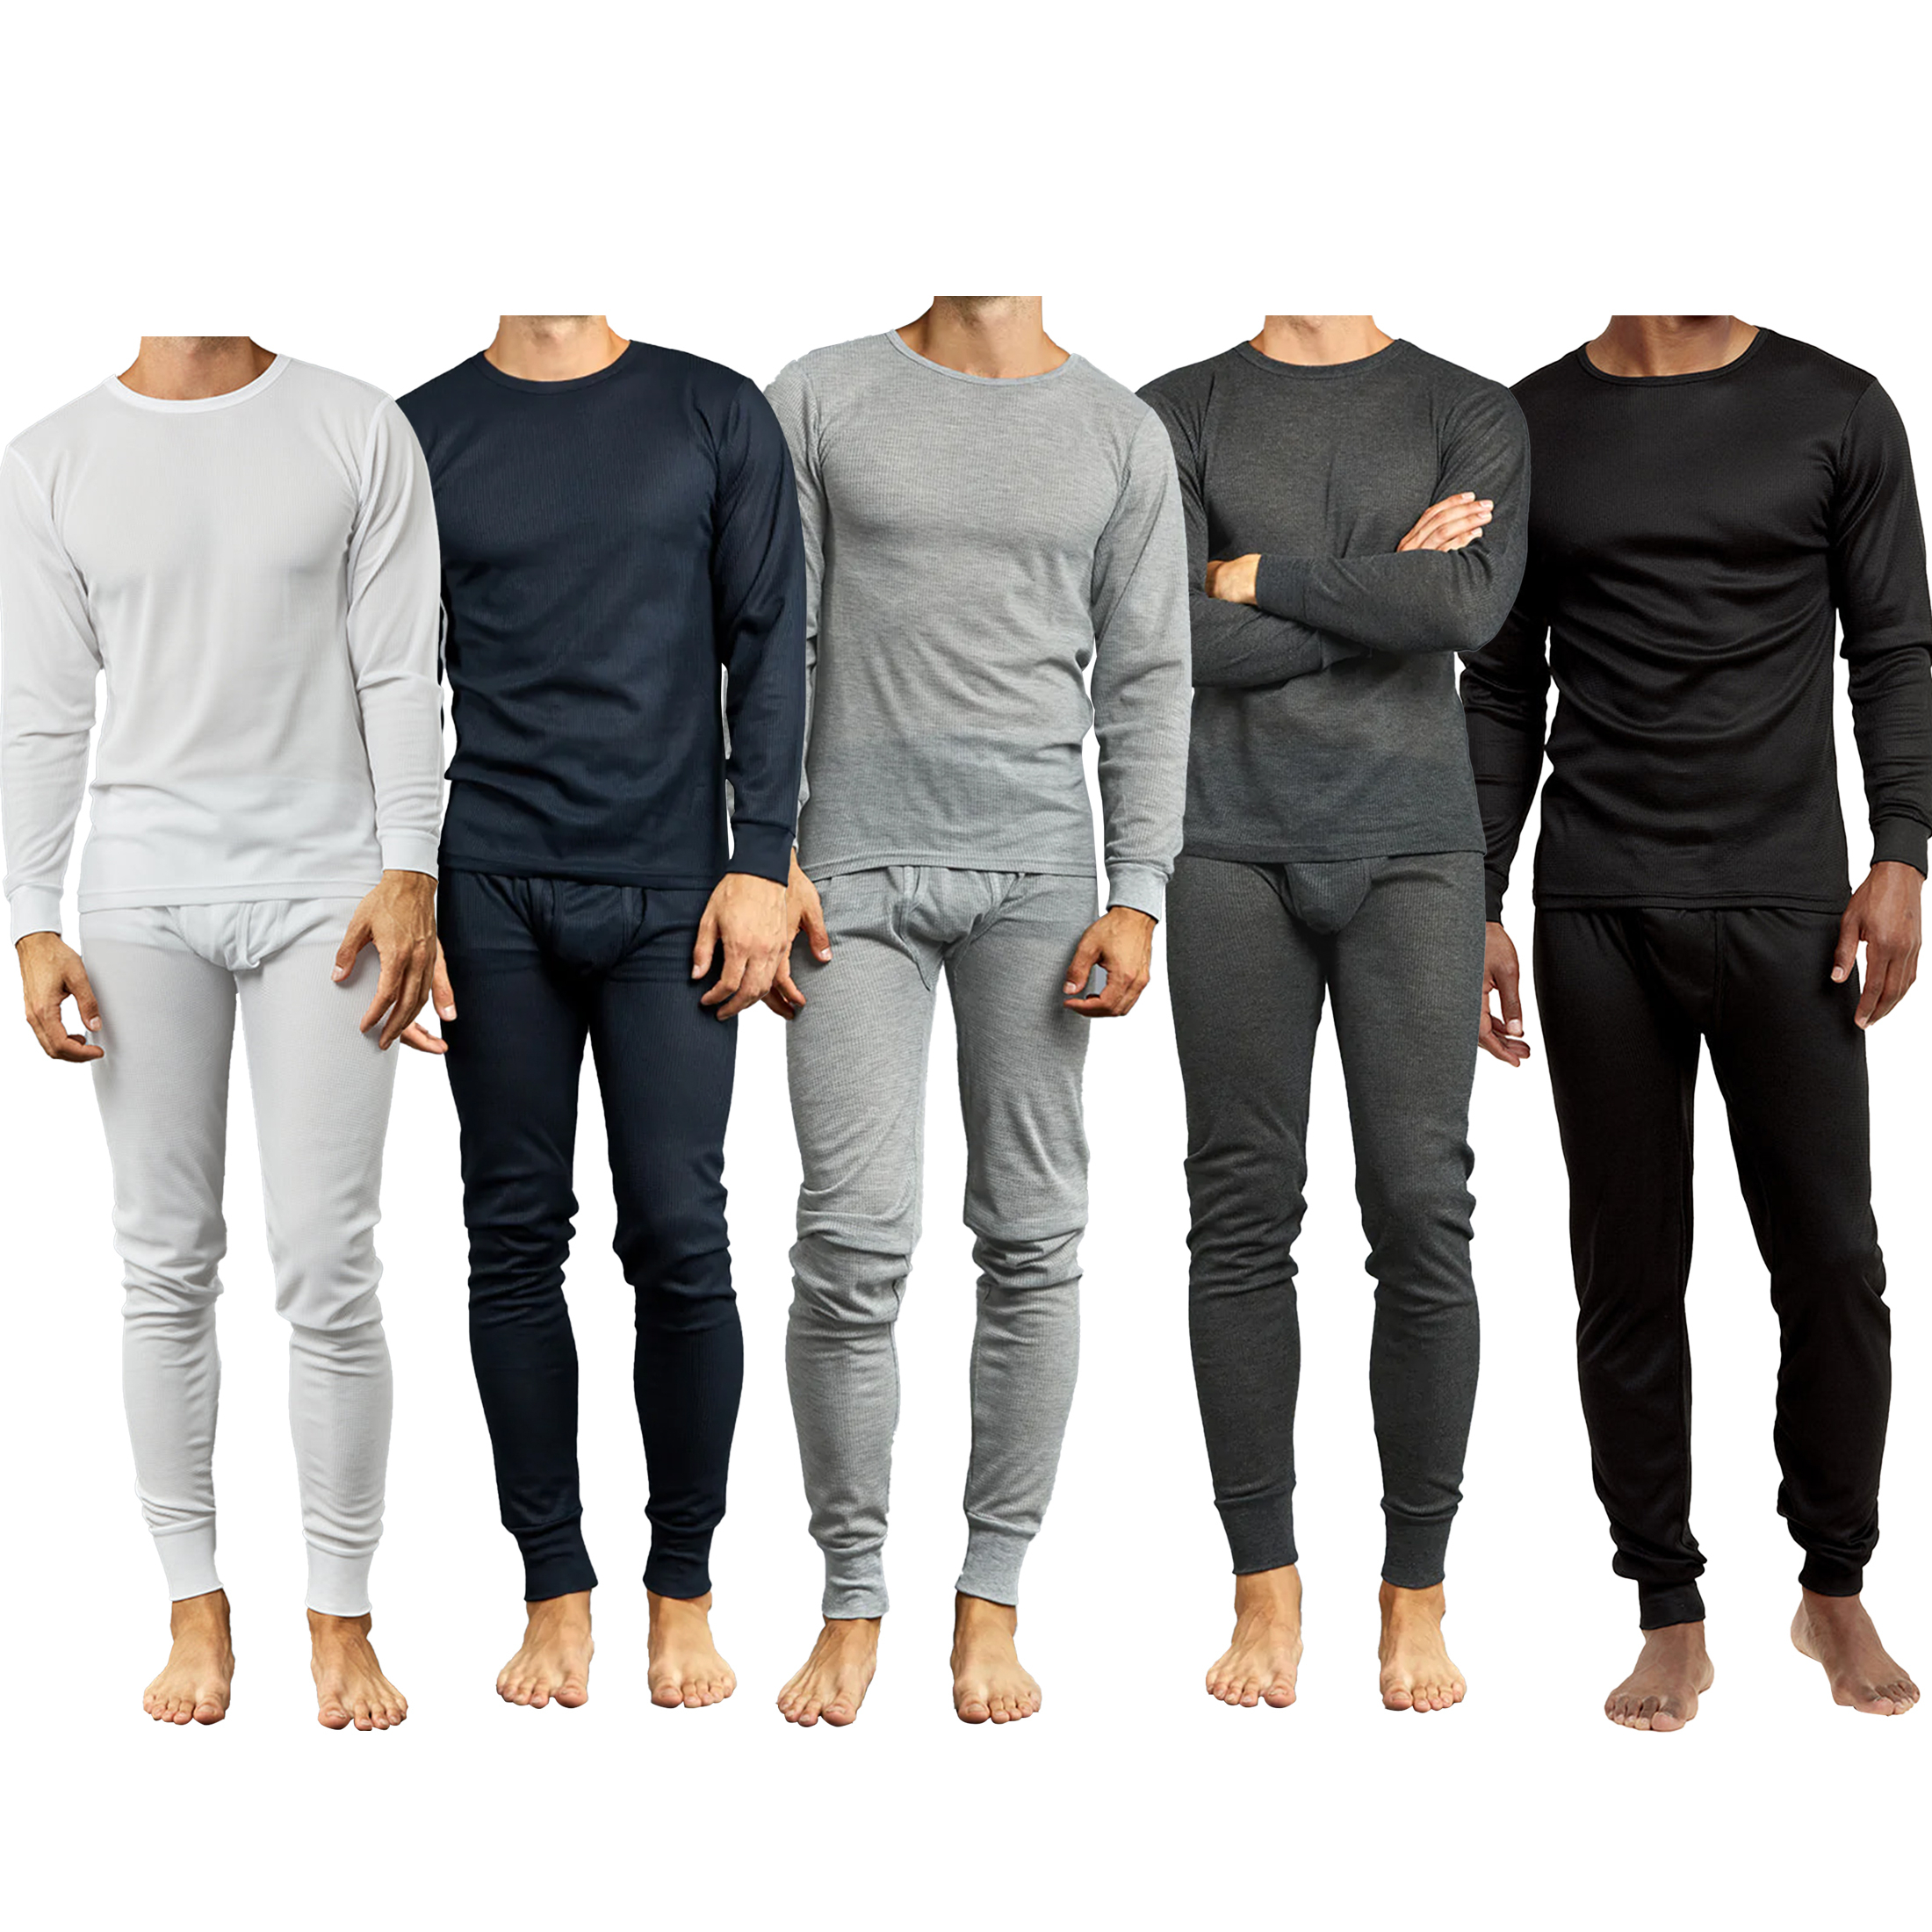 2-Piece: Men's Moisture Wicking Long Johns Base Layer Thermal Underwear Set (Top & Bottom) - Navy, X-Large